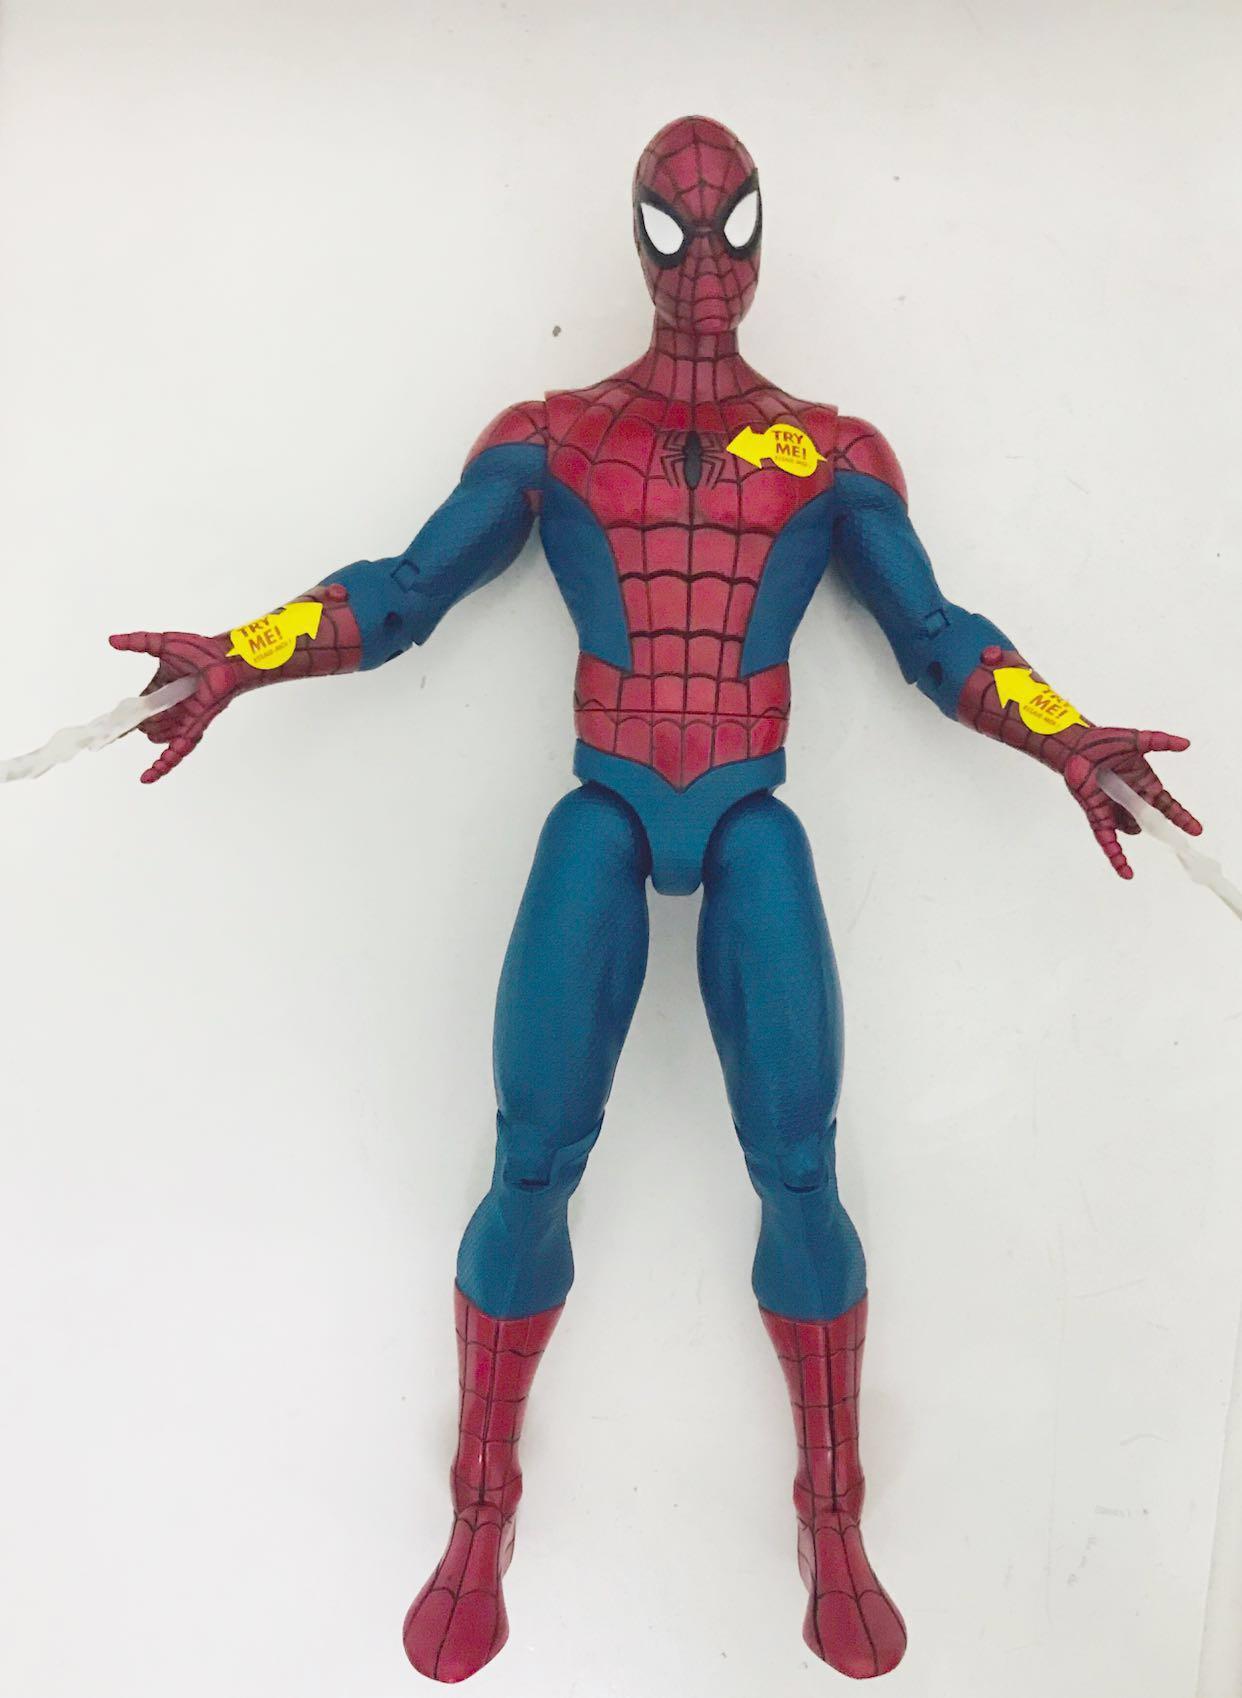 spider man talking action figure